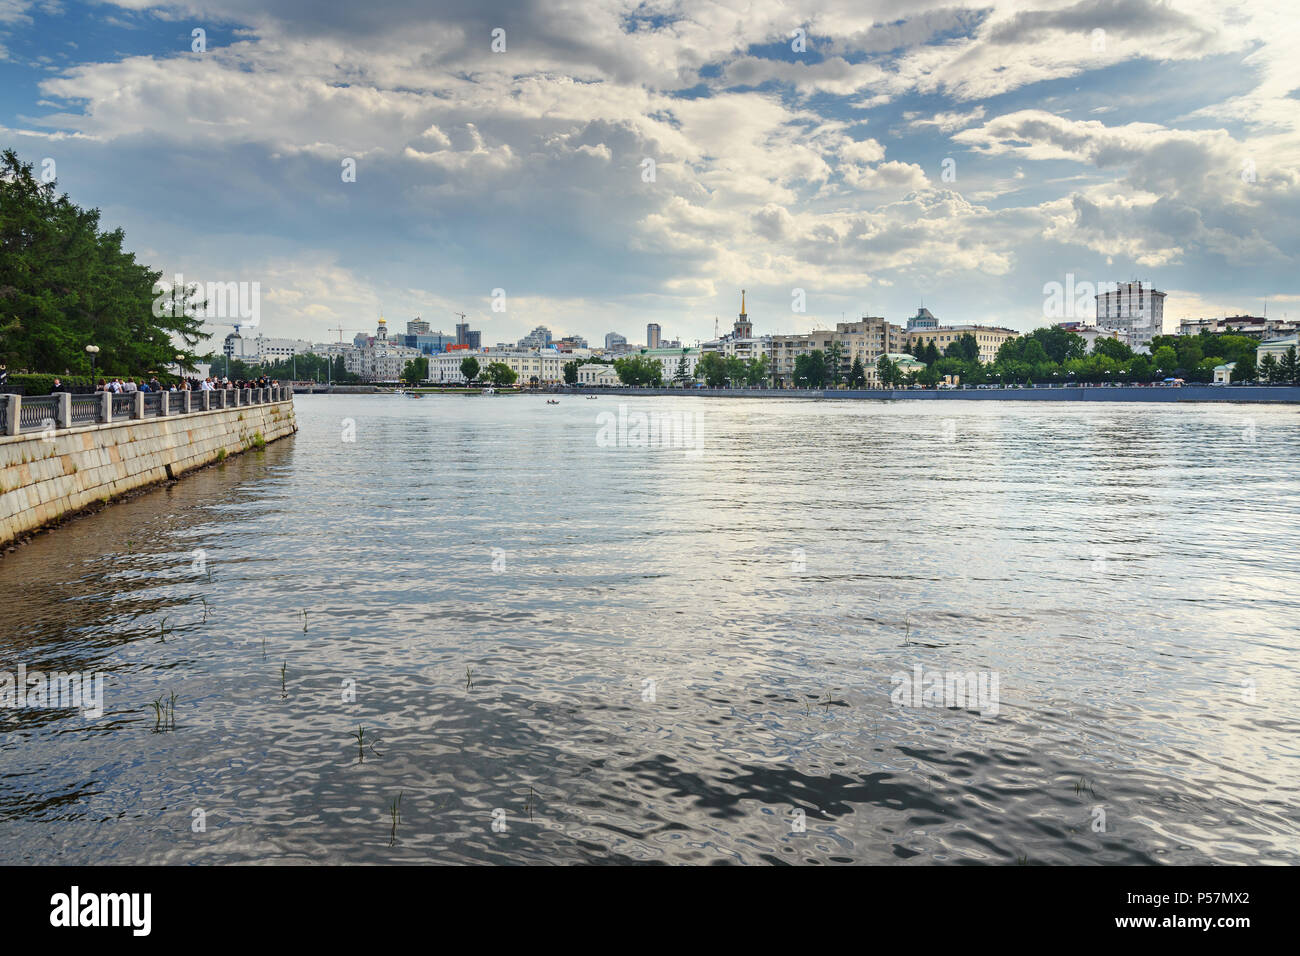 Yekaterinburg, Russia - June 21, 2018: View of Yekaterinburg city center and embankment on Iset River Stock Photo